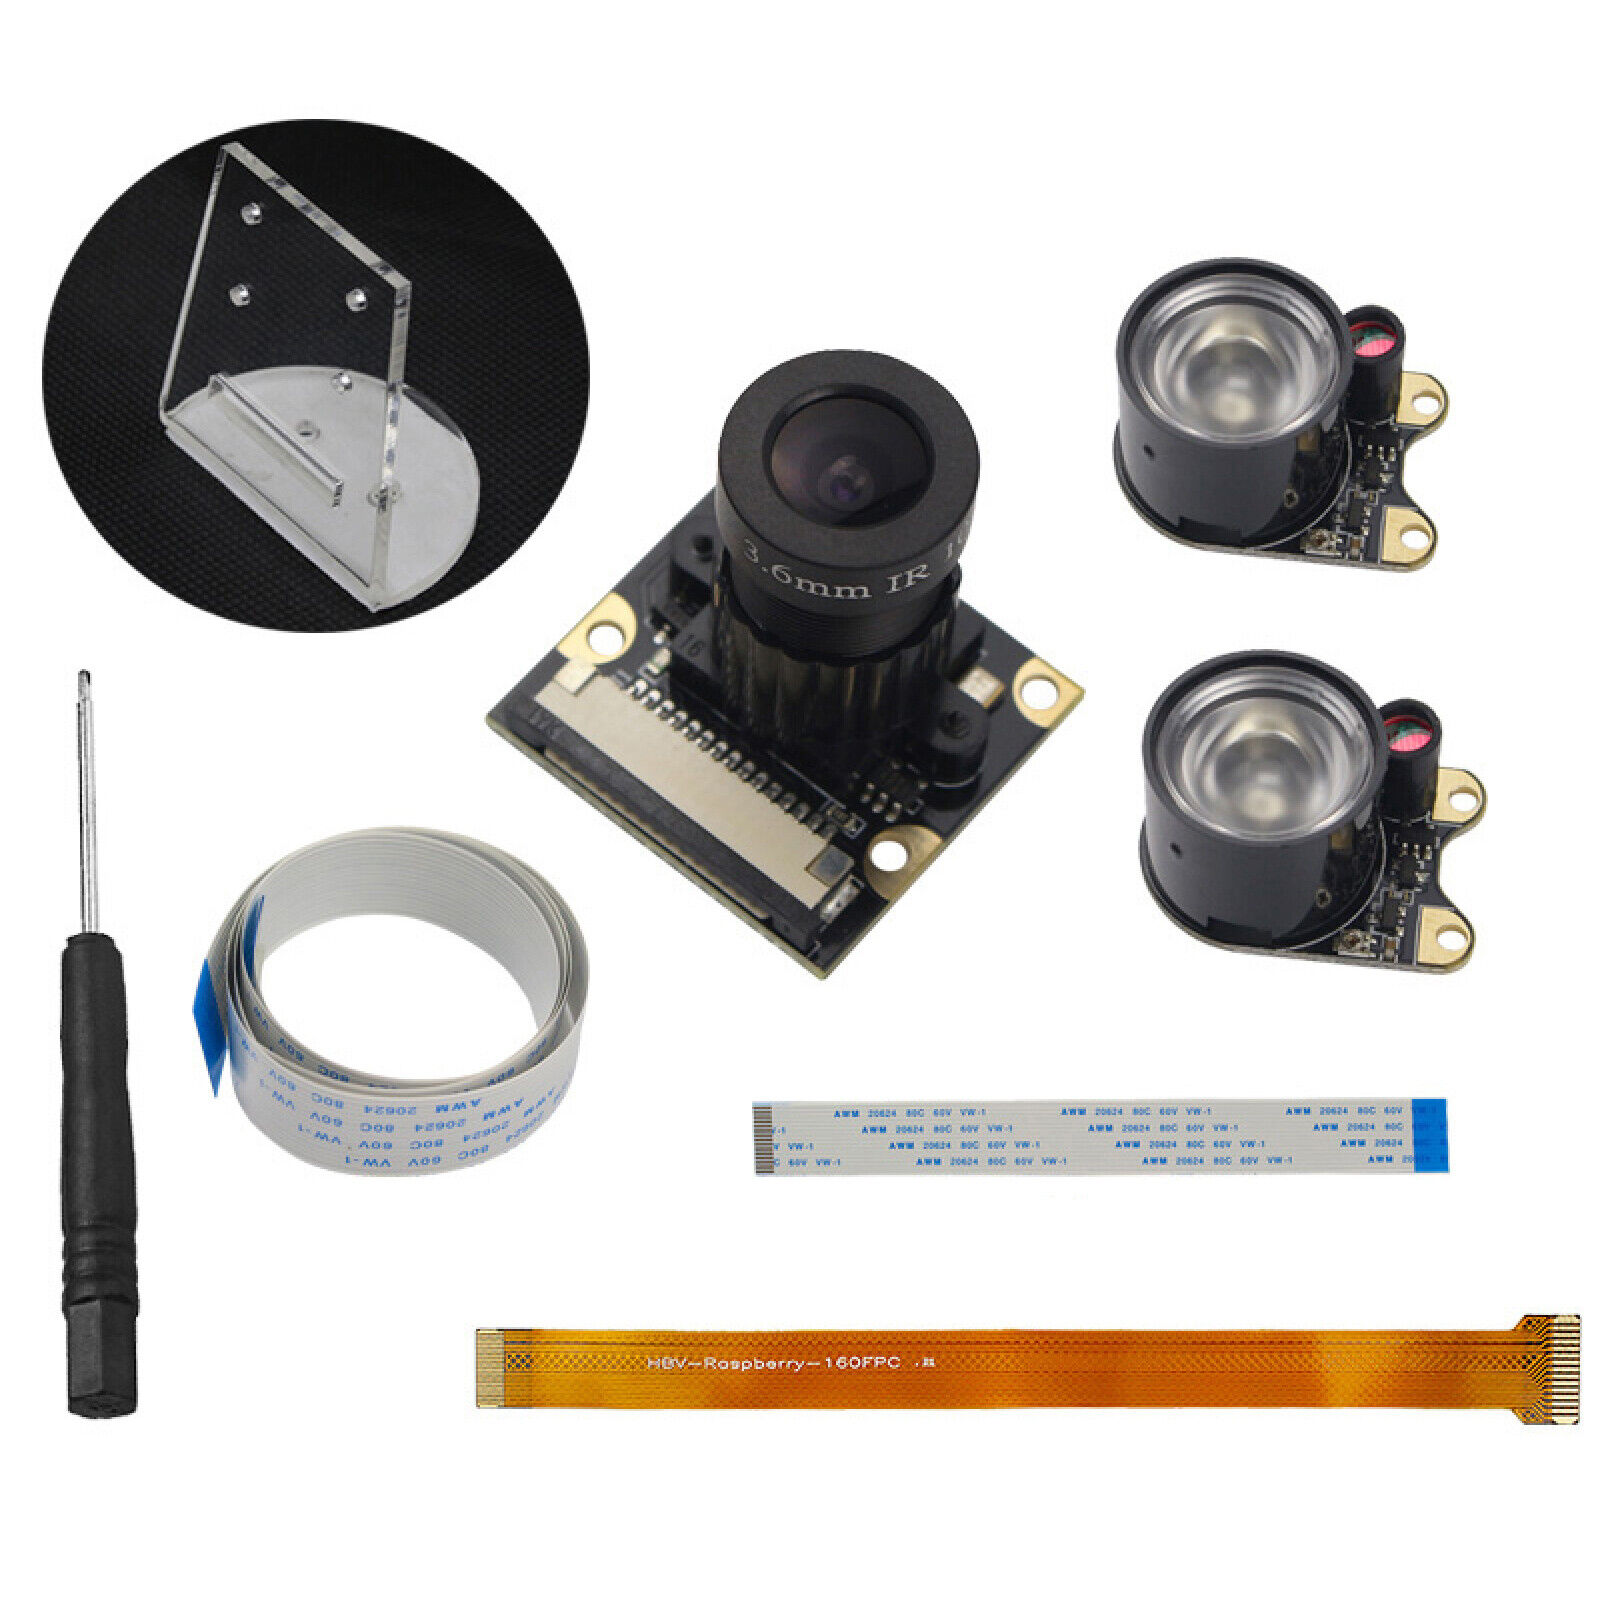 1080P Fish Eye Lens Night Vison Camera Module for Raspberry Pi 4B/3B+/Zero/WH